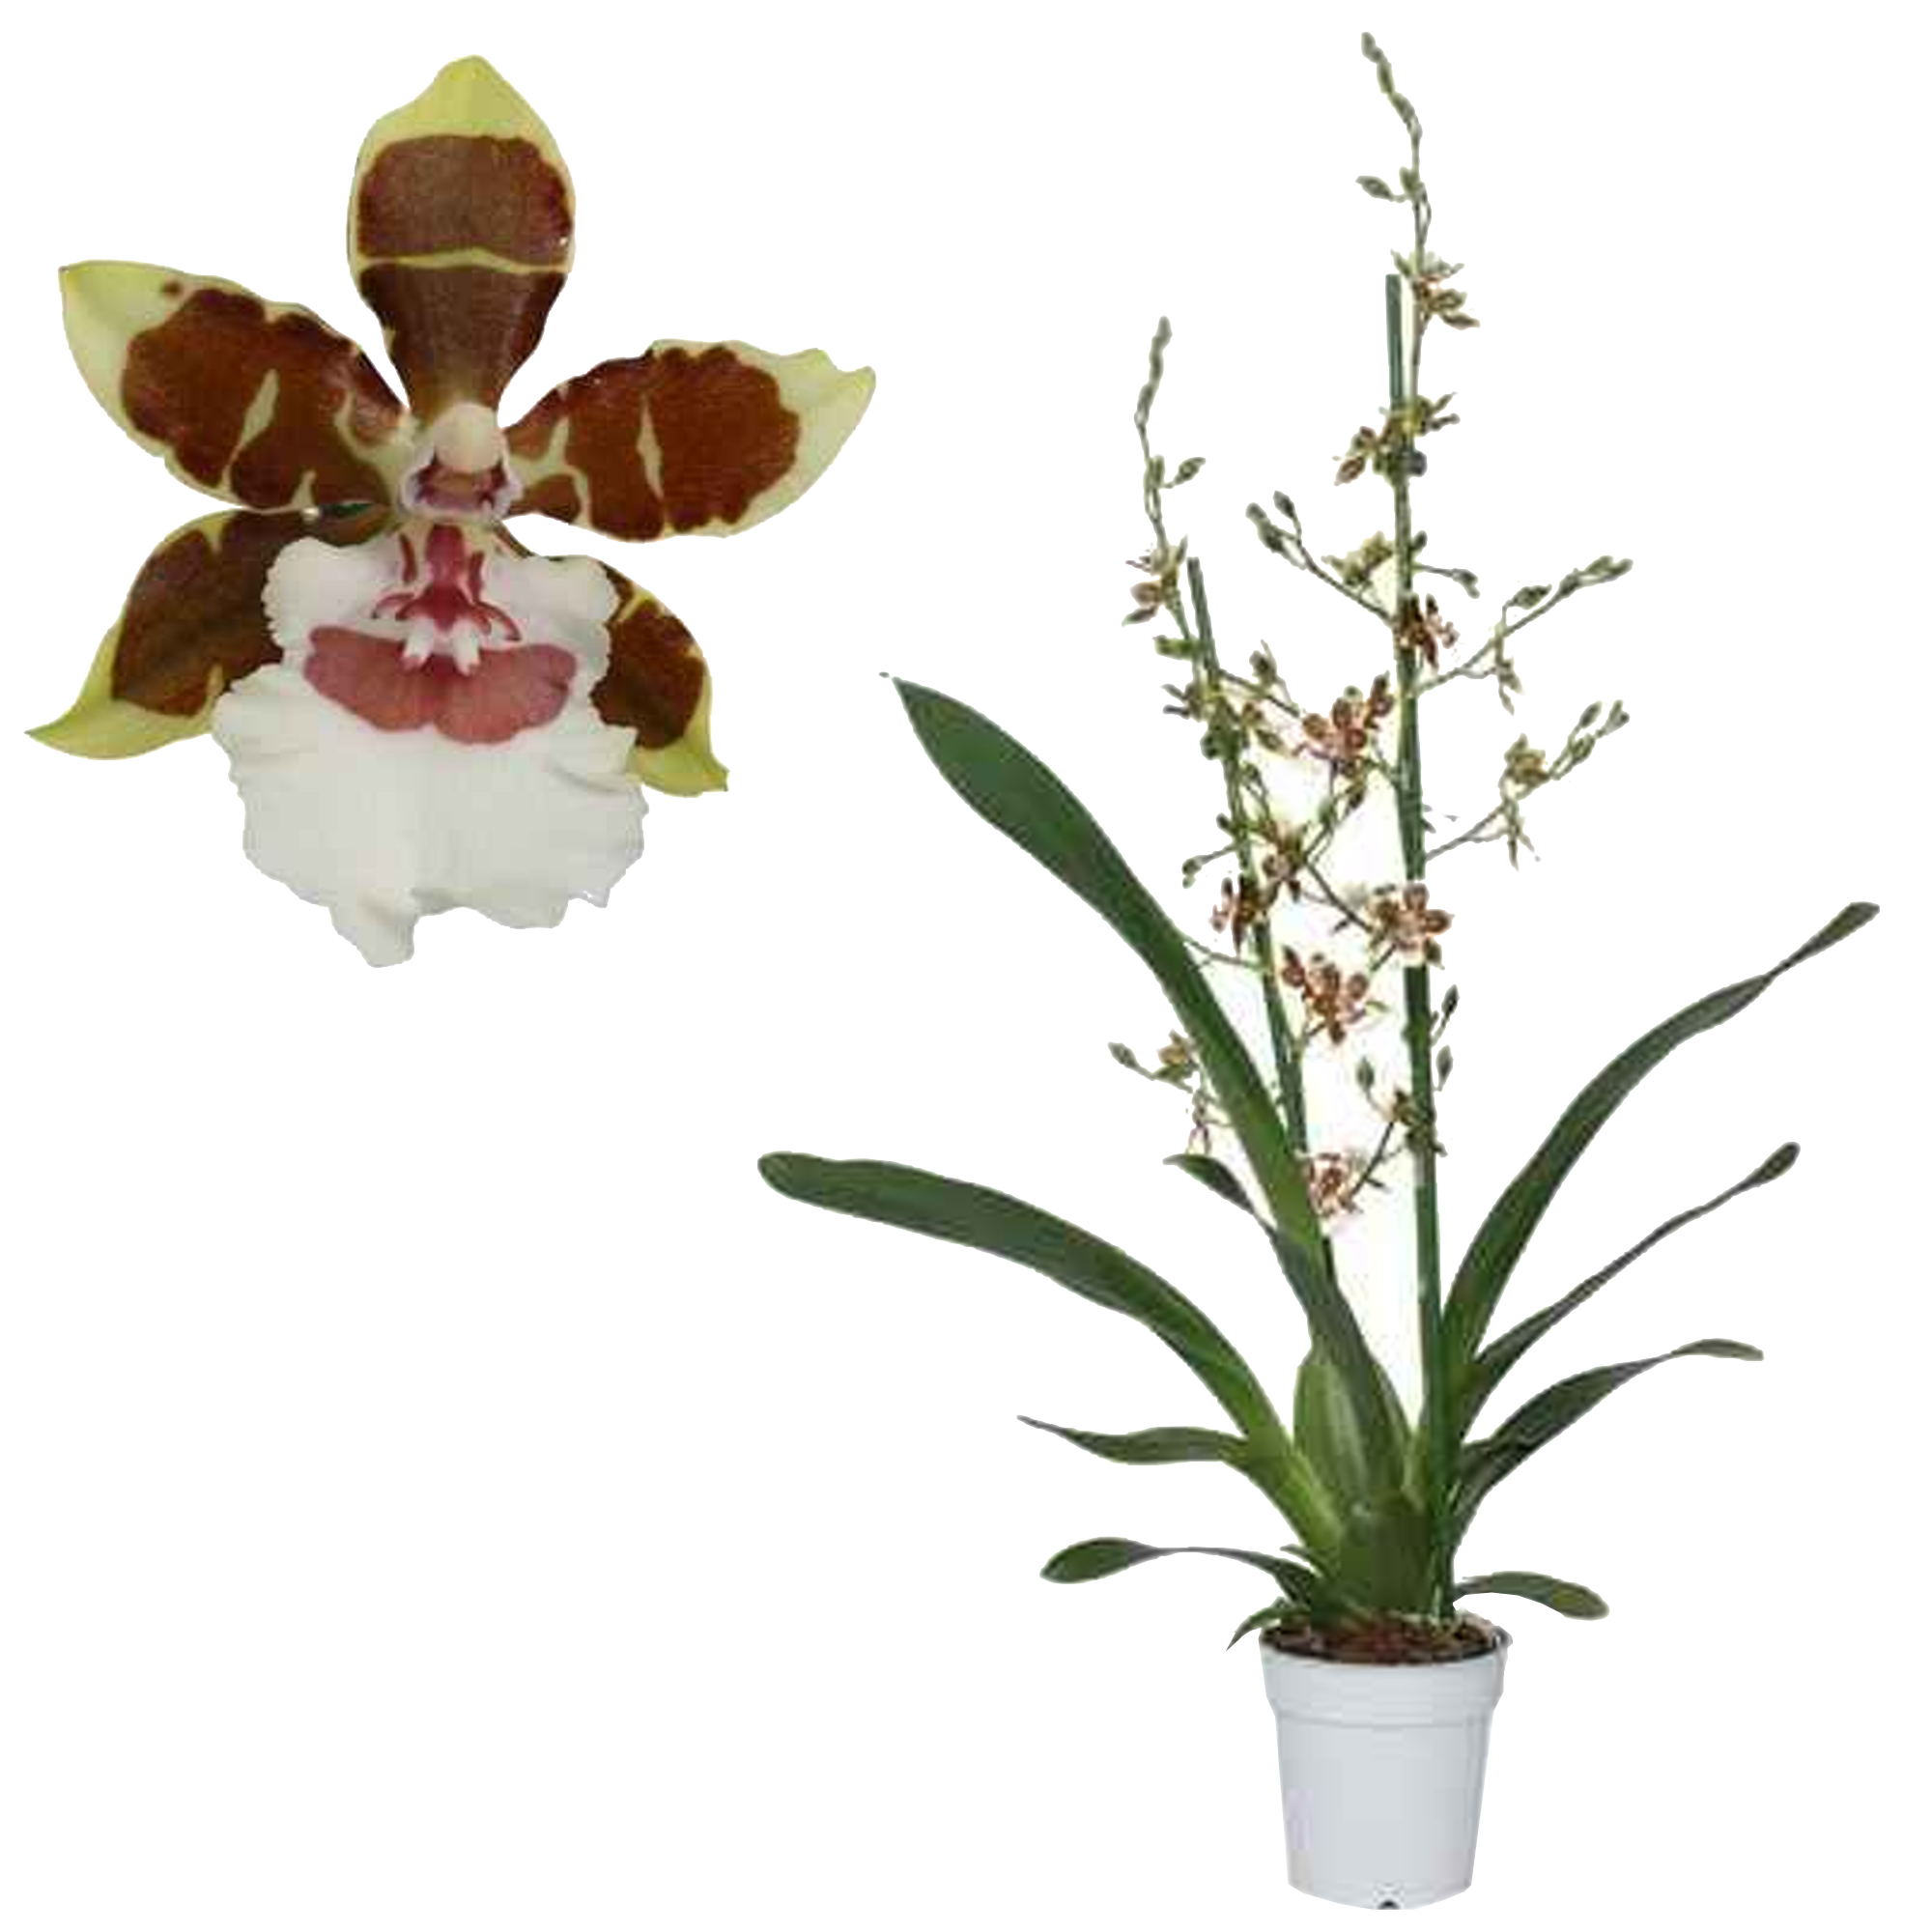 Cambria Orchidee 'Jungle Monarch' 2 Rispen rot/weiß, 12 cm Topf + product picture